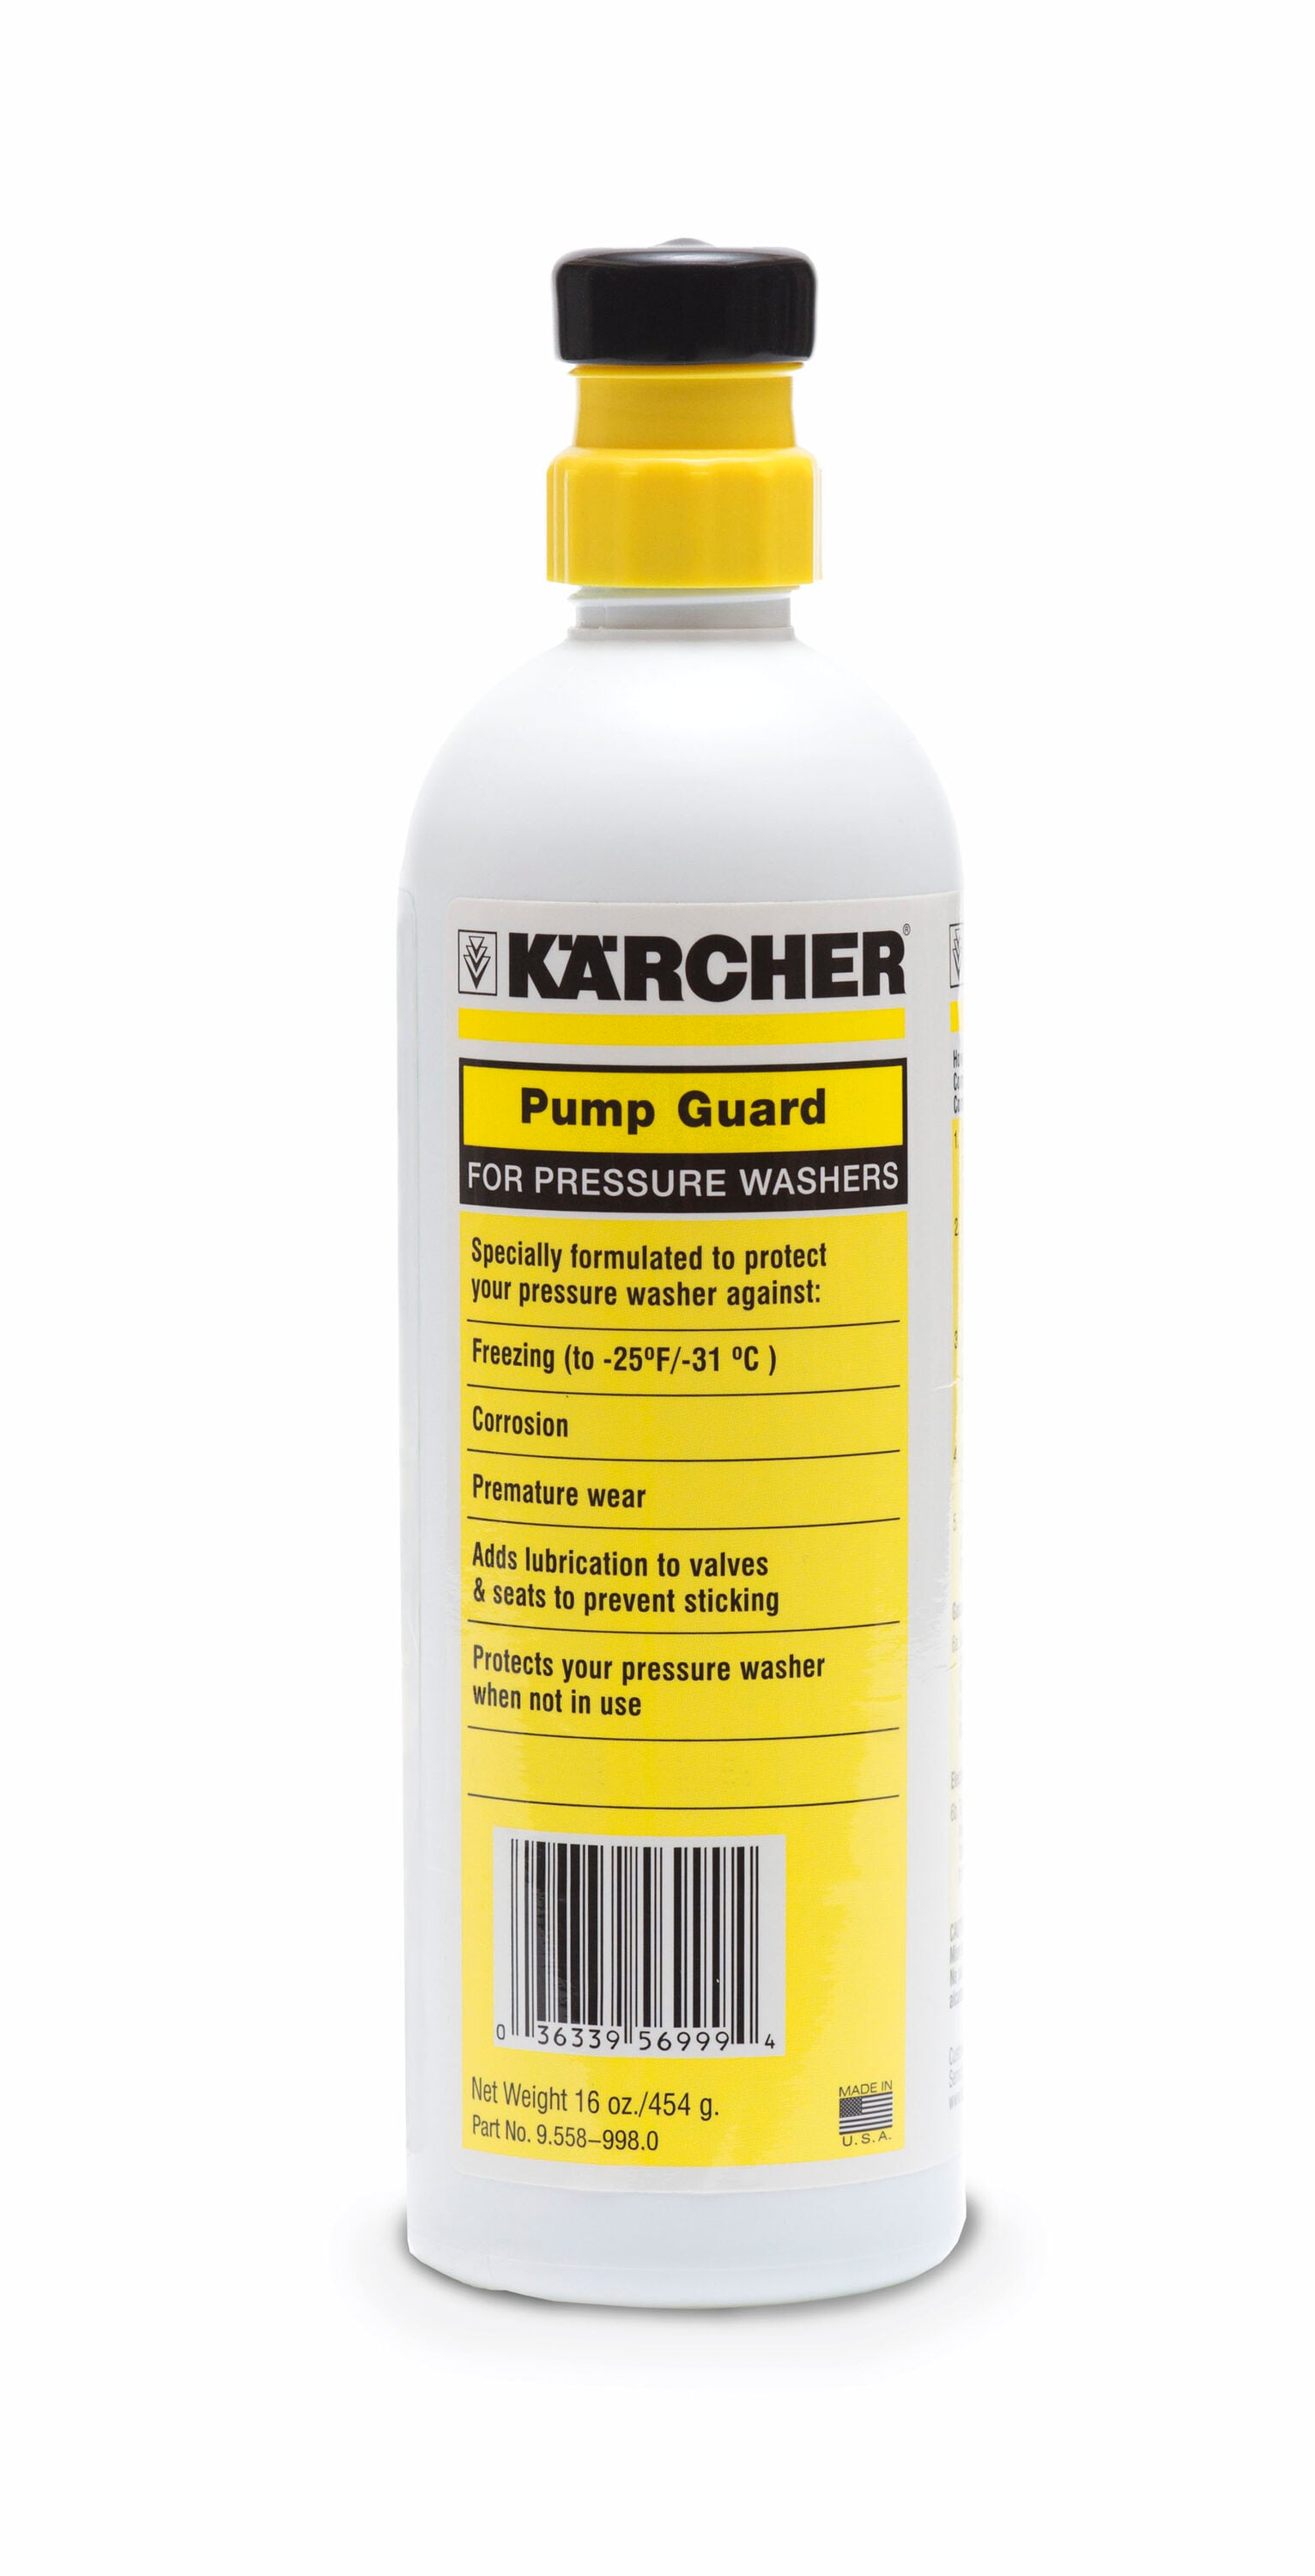 Karcher 1 oz Pump Saver in the Pump Saver department at Lowes.com